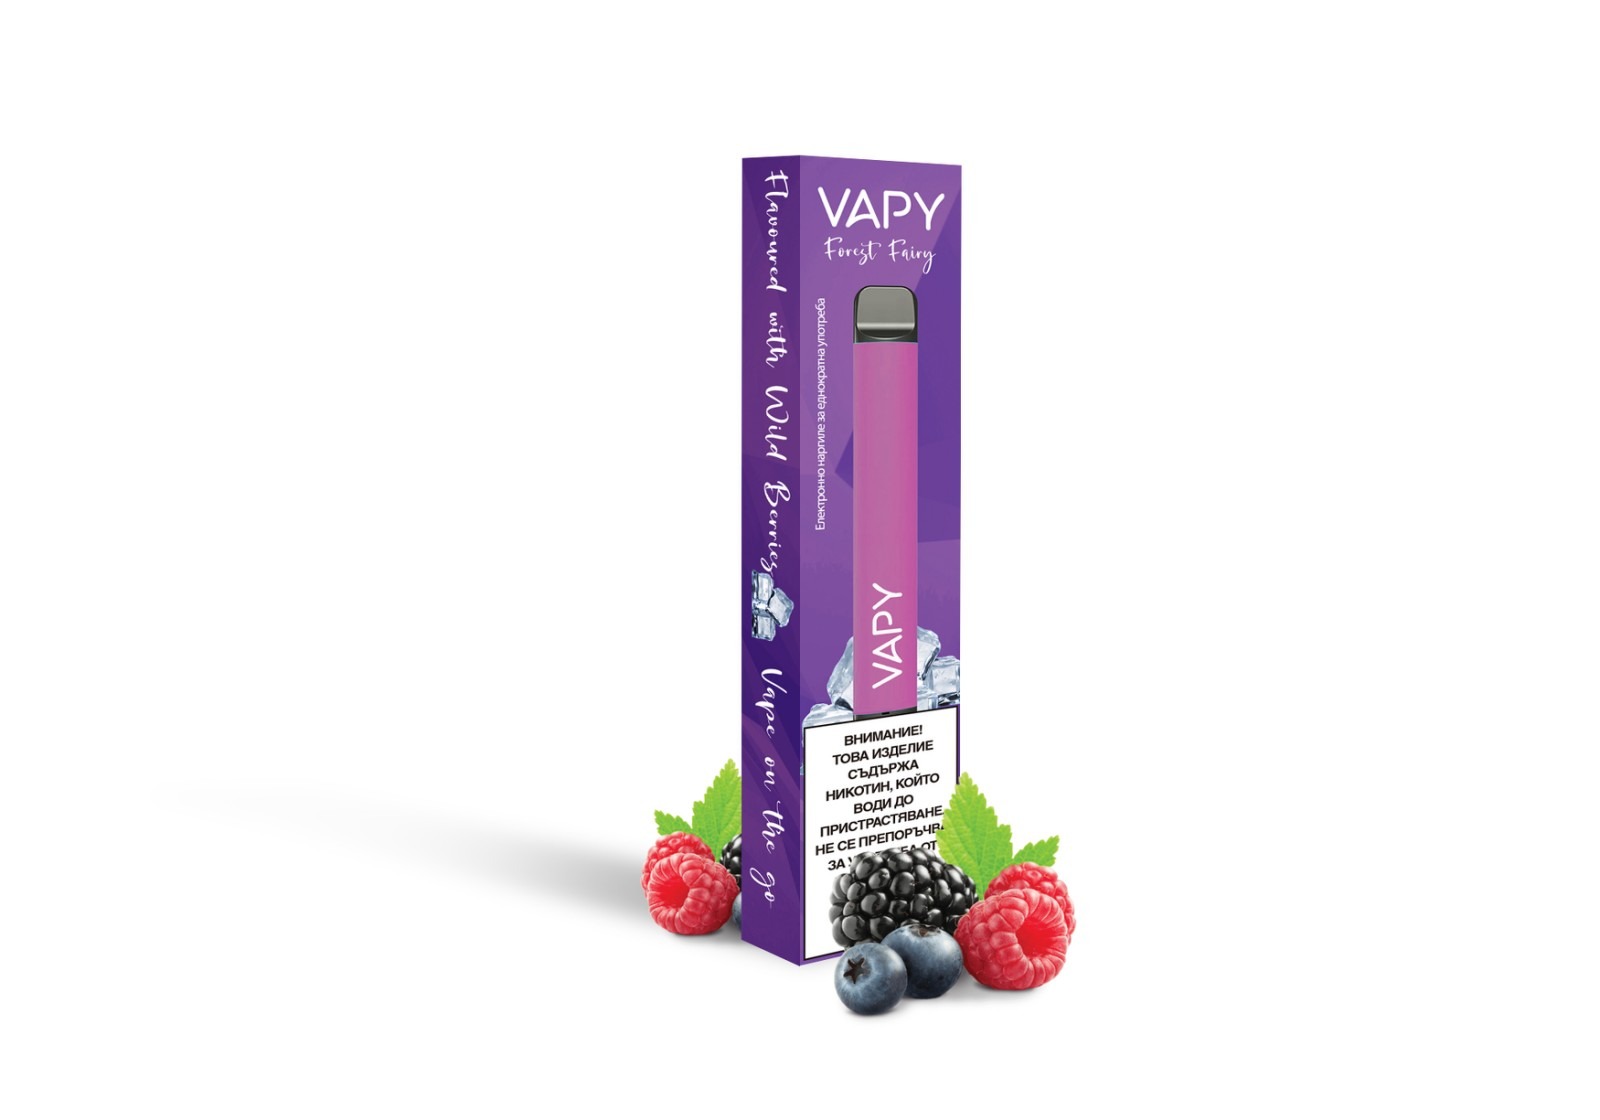 vapy-forest-fairy-wld-berries-1.jpg